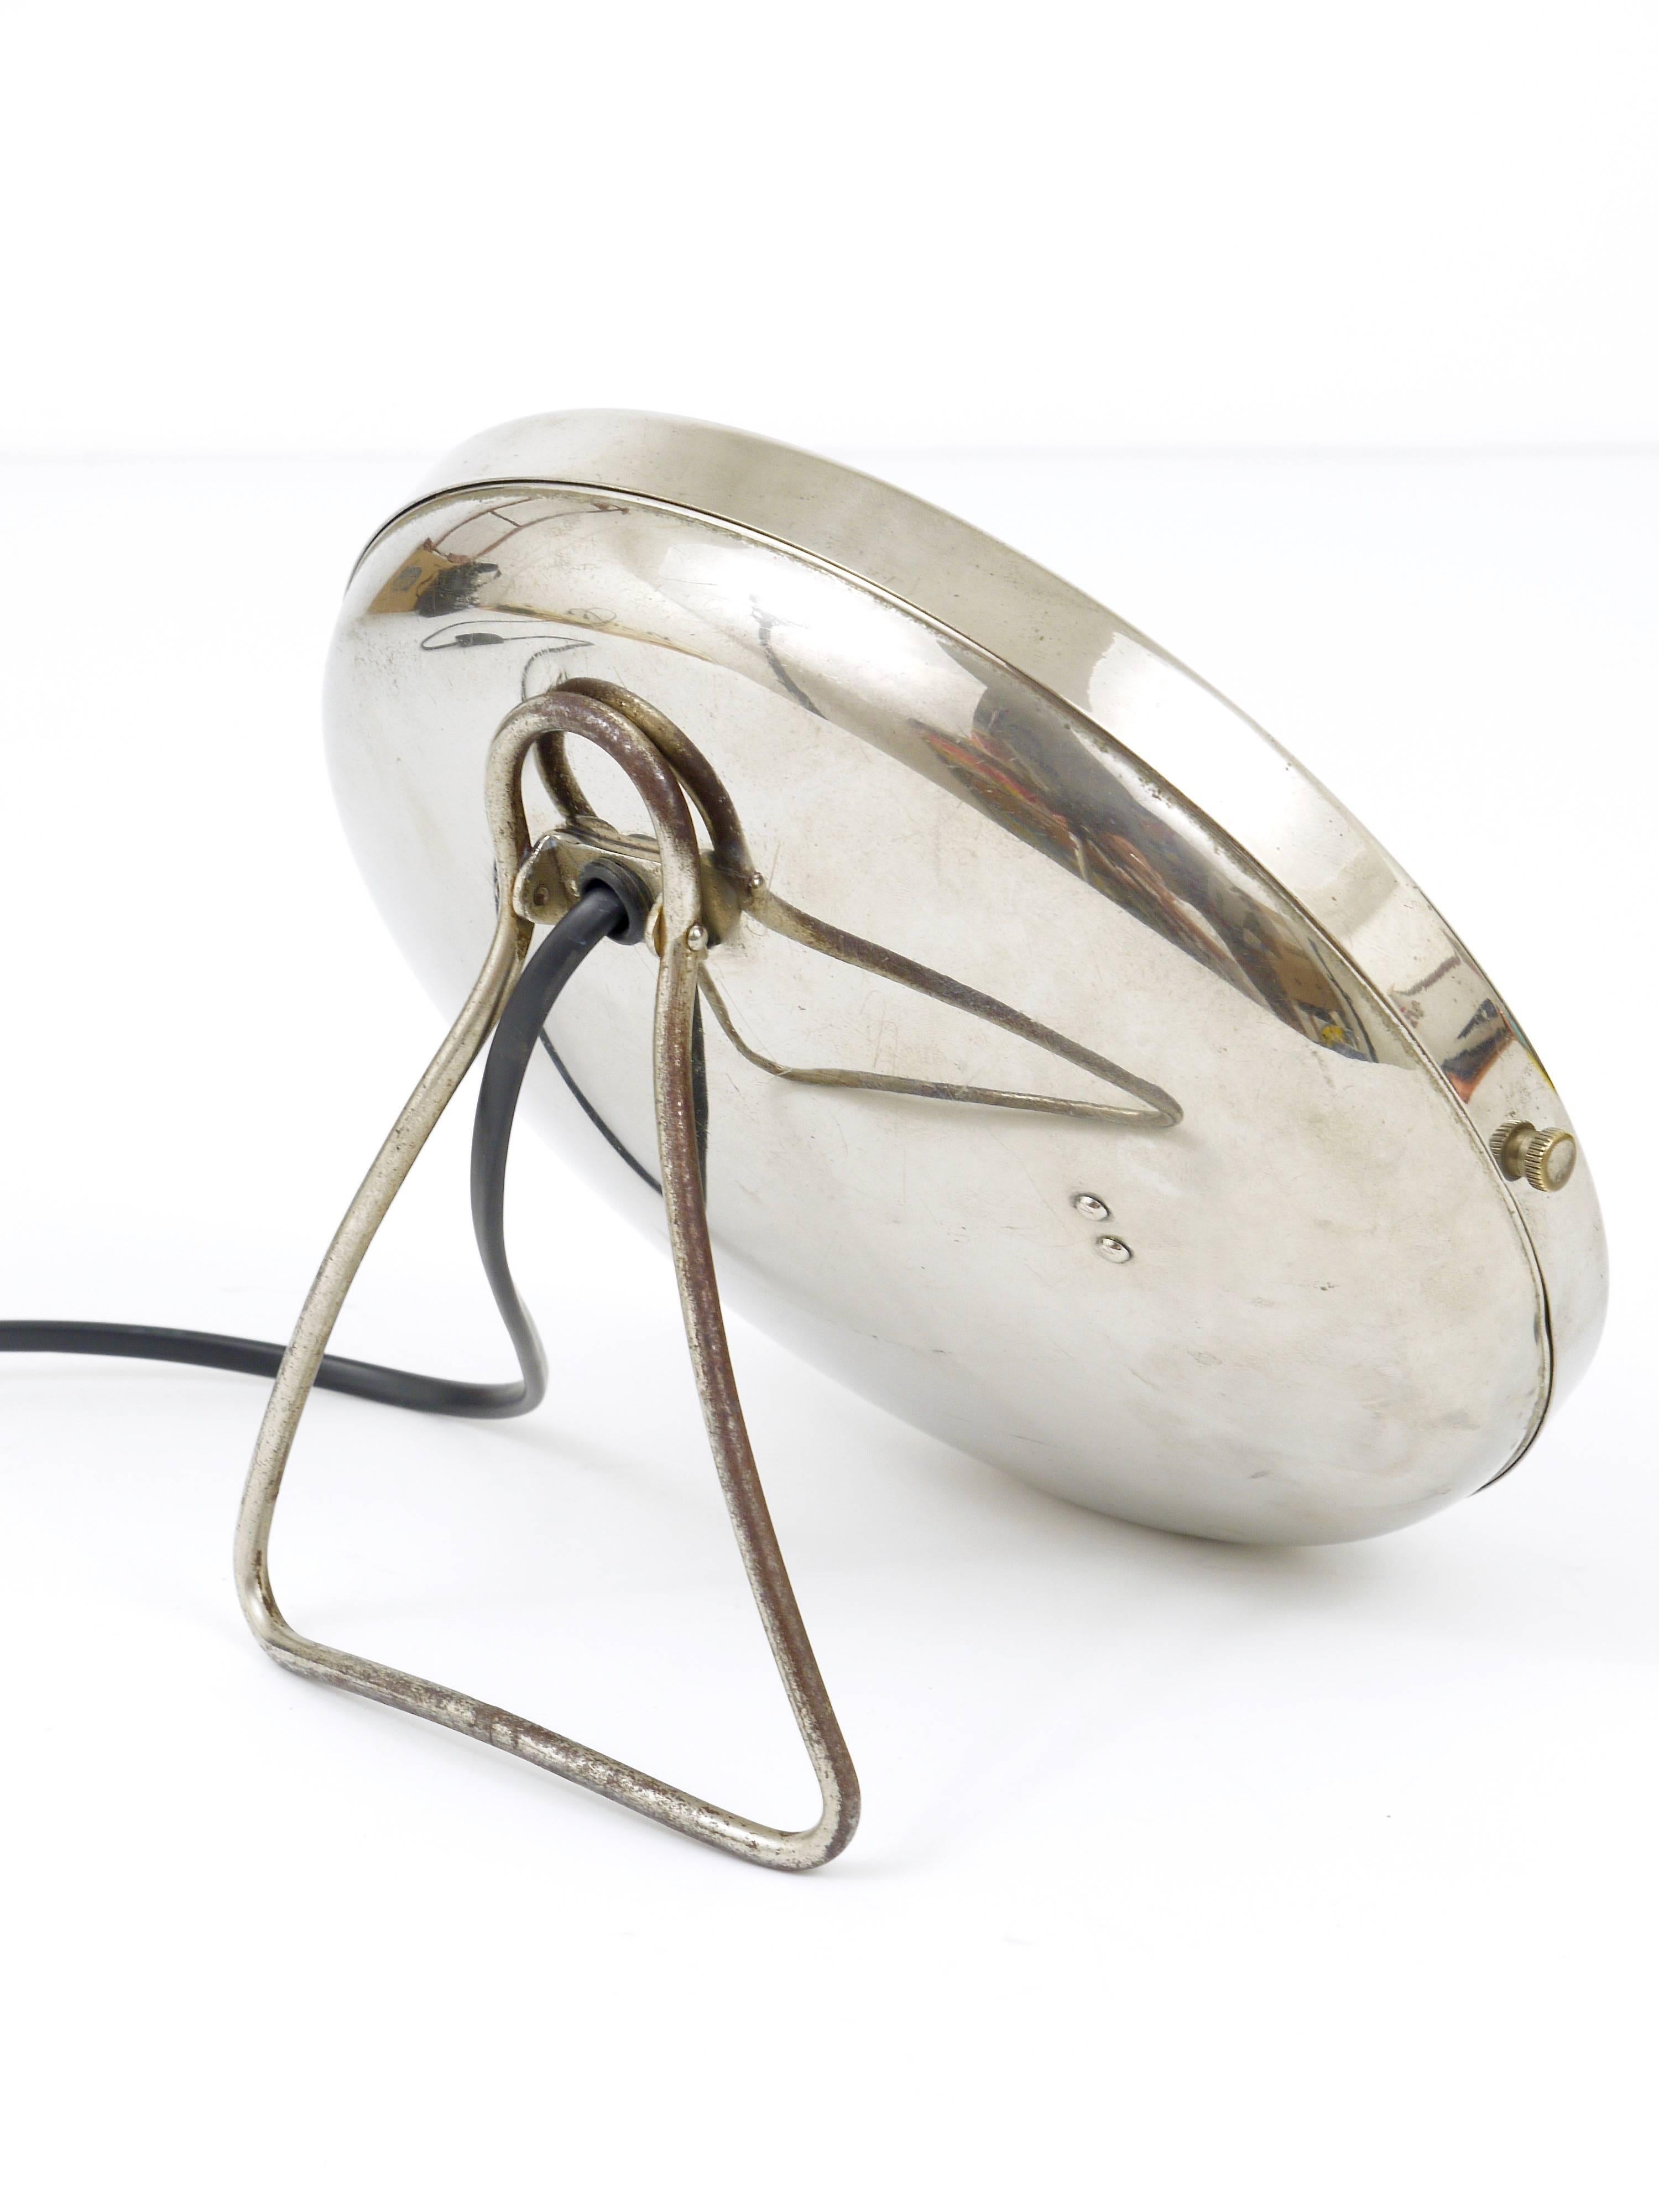 Metal Illuminated Shaving or Vanity Mirror by Marcel Breuer, Bauhaus for Zeiss Ikon